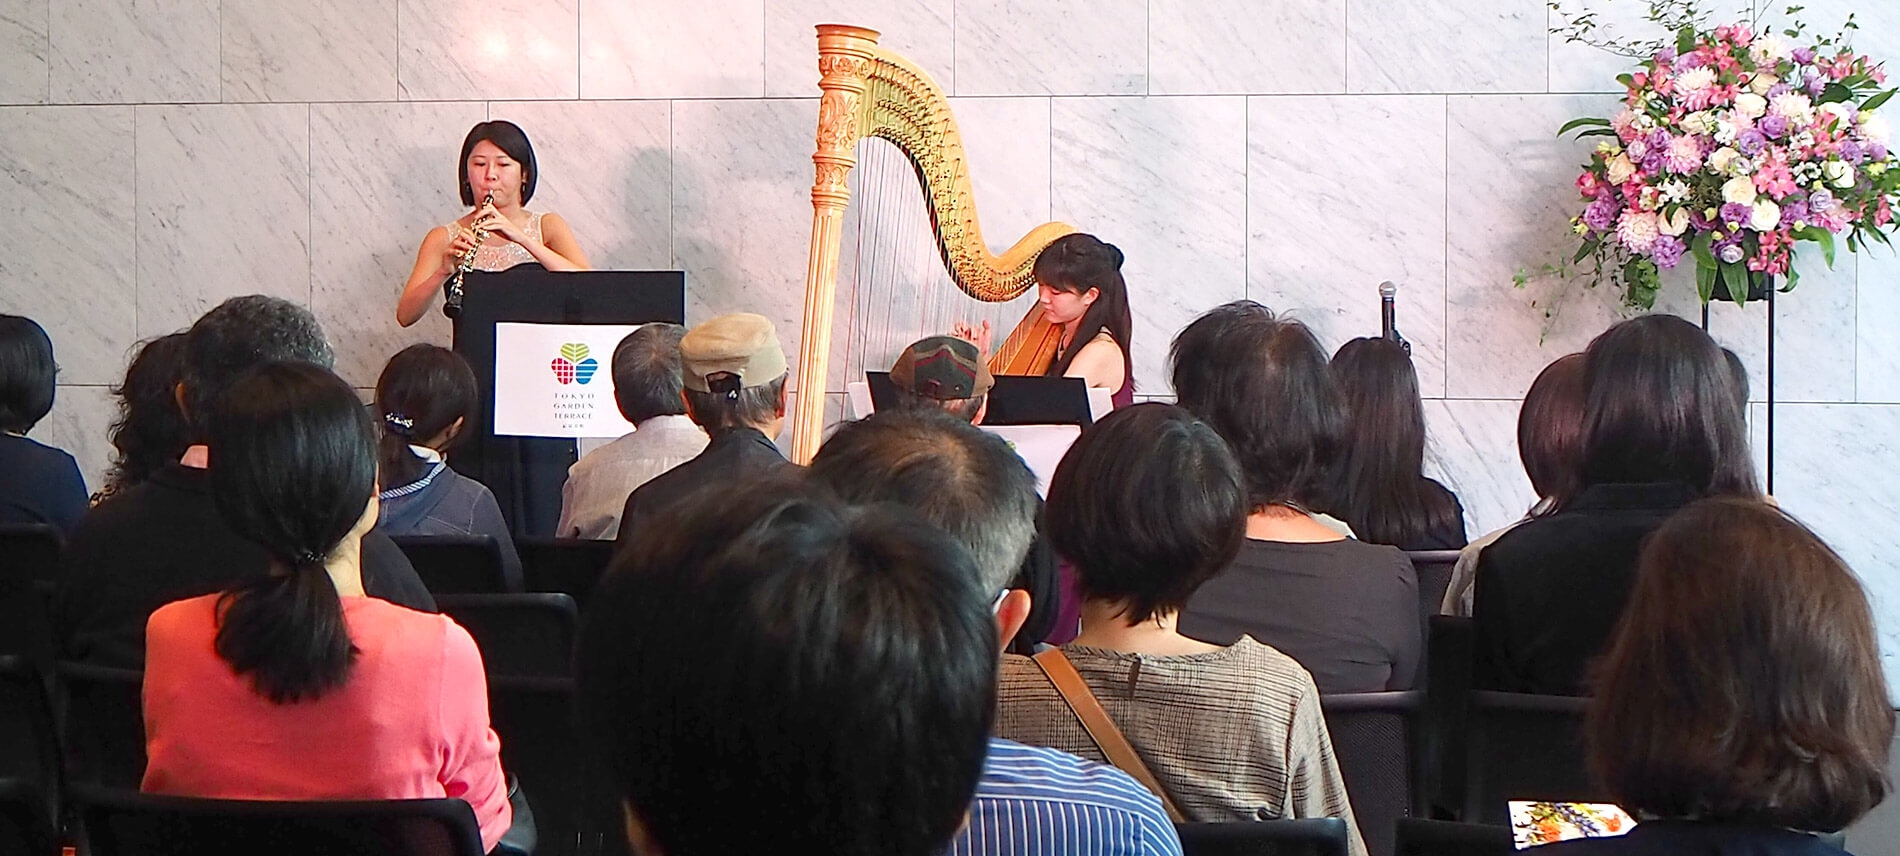 KIOI CONCERT 東京藝術大学卒業生によるコンサート グランド・ハープとオーボエのひととき